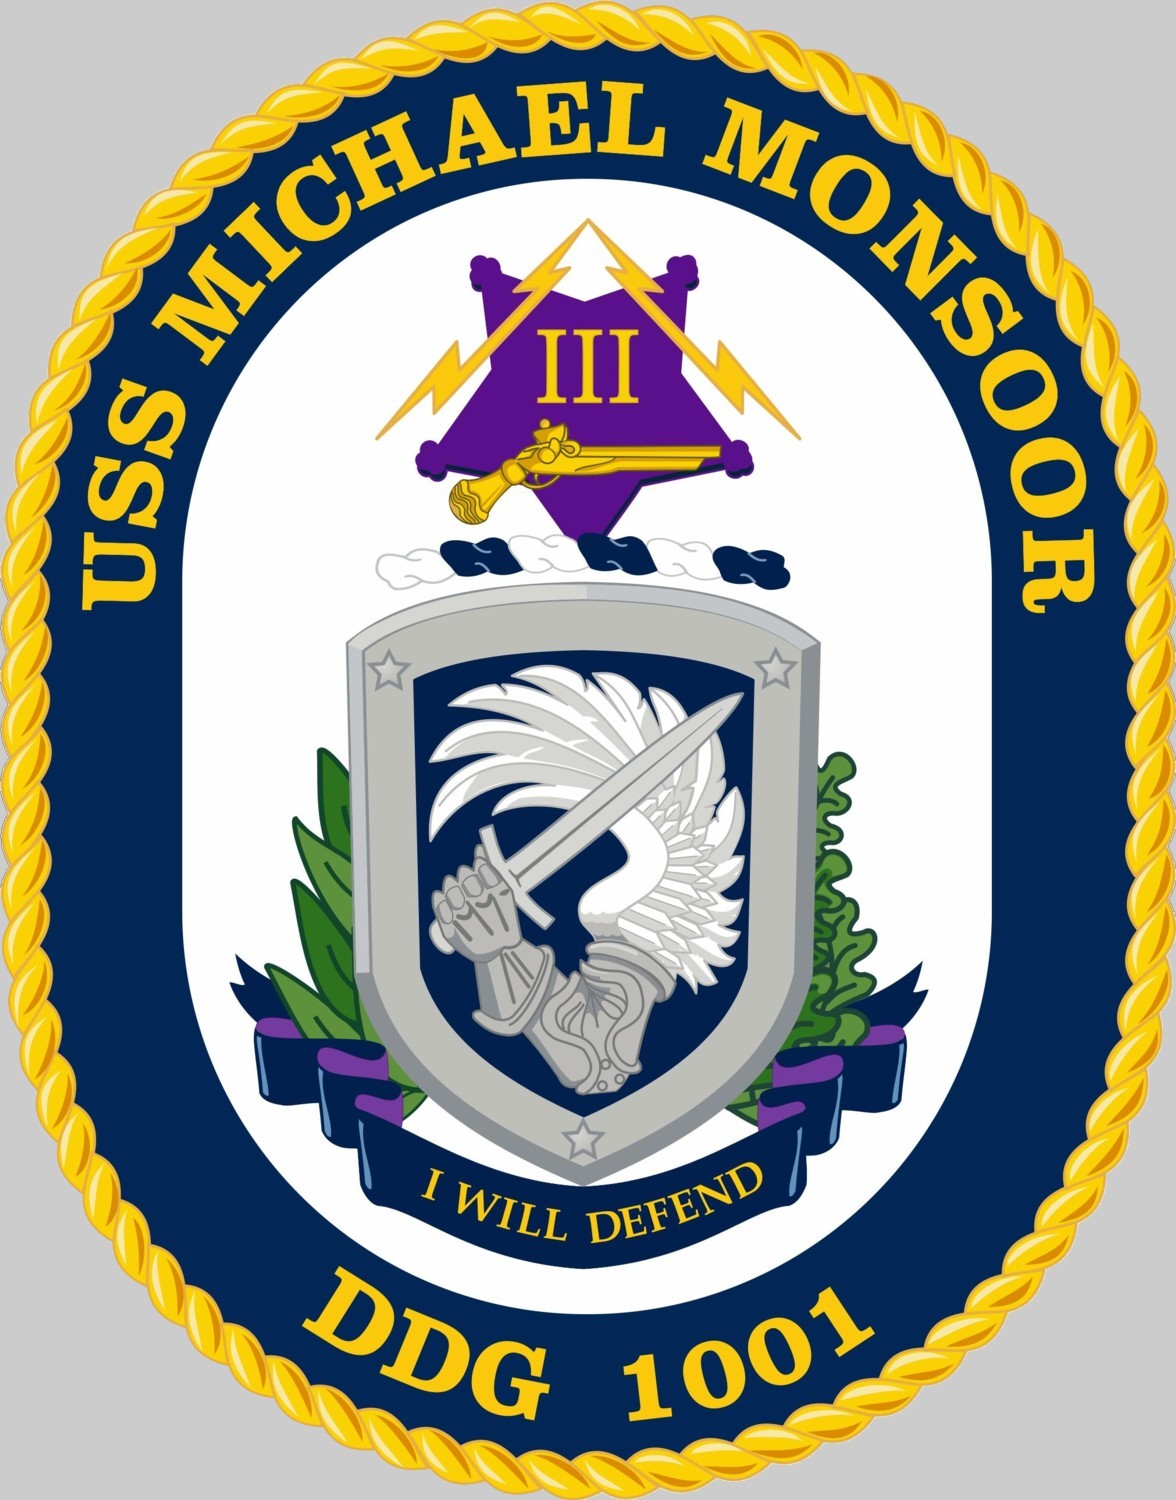 ddg-1001 uss michael monsoor patch crest insignia badge destroyer navy 02c